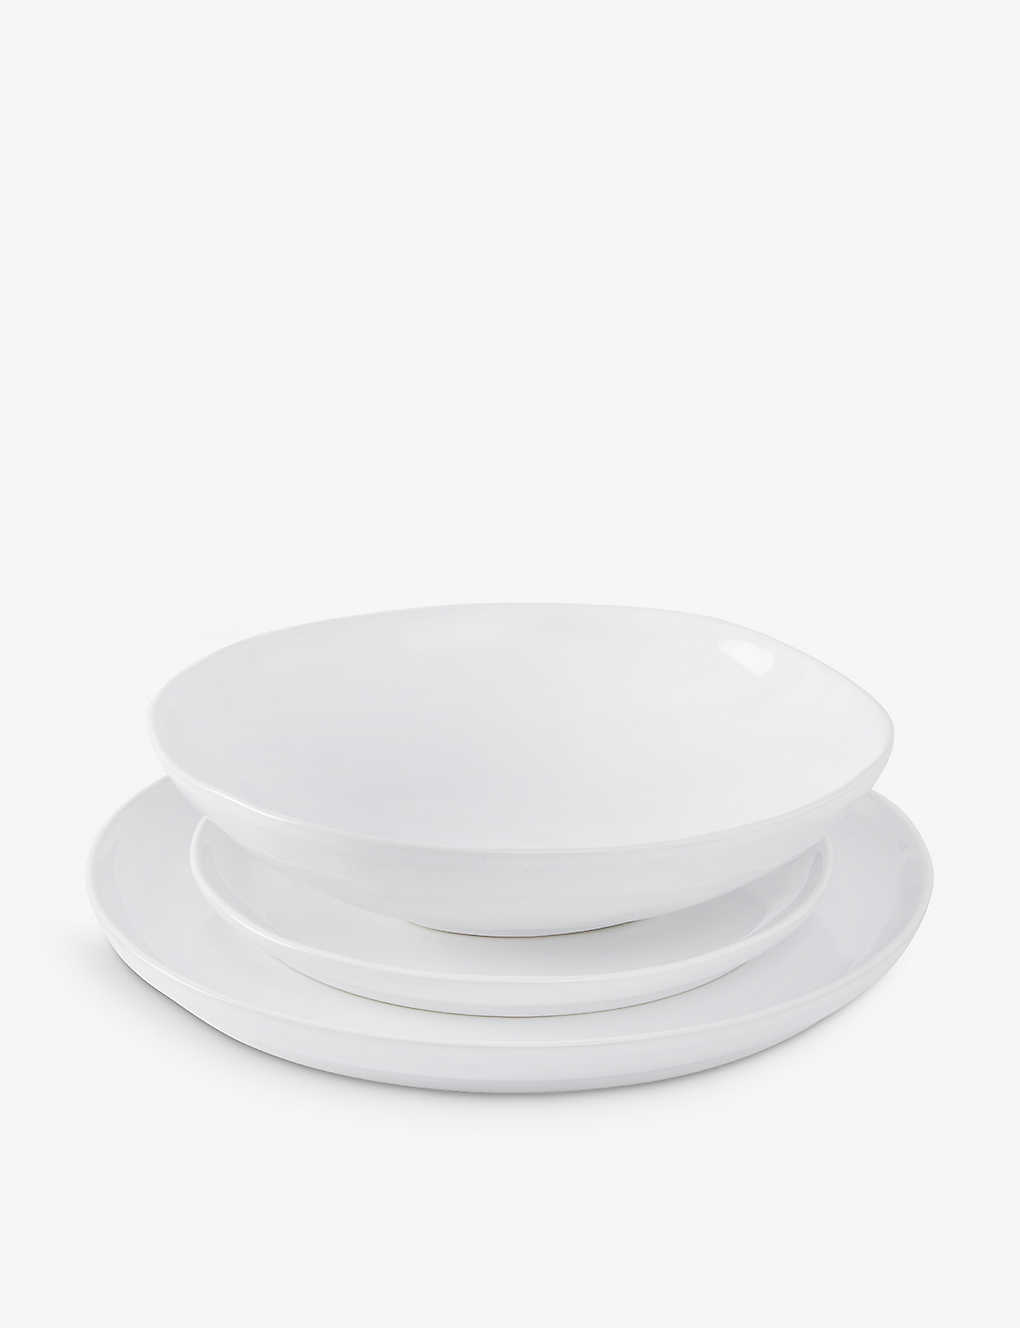 THE WHITE COMPANY |gx 12s[X fBi[Zbg Portobello 12-piece dinner set WHITE